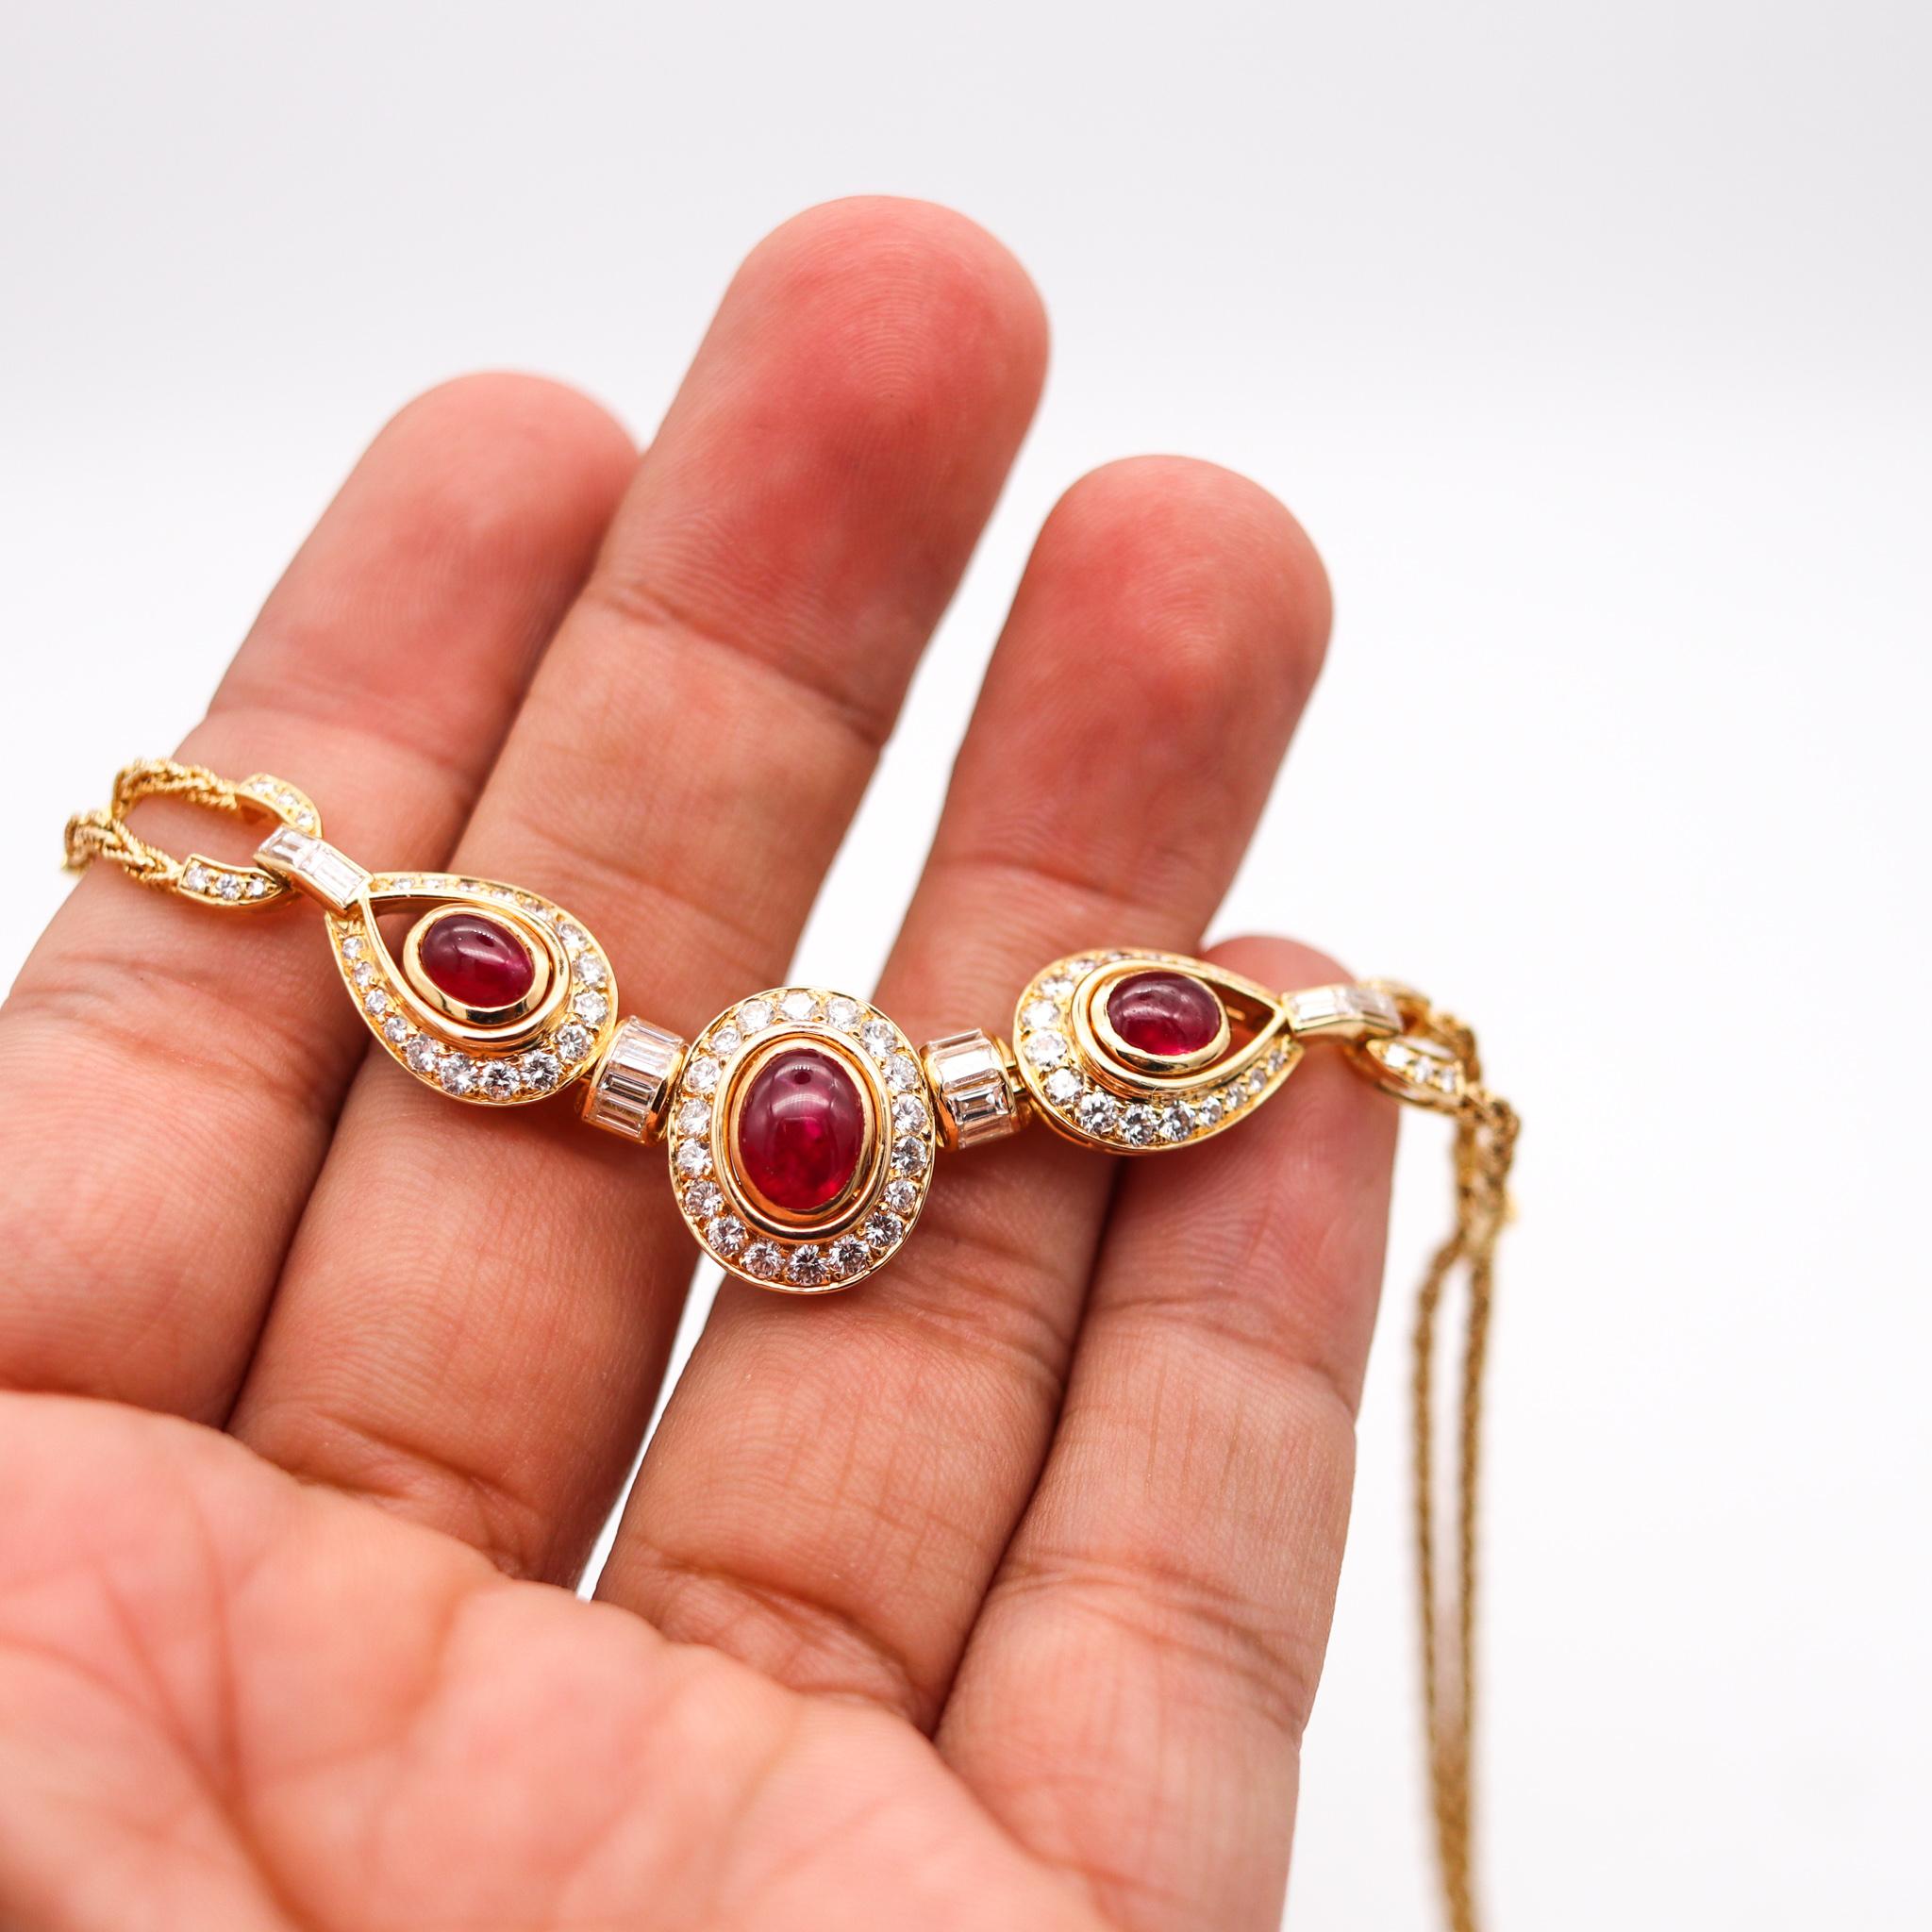 Cartier George L'enfant Necklace 18Kt Gold 10.42 Cts of Burmese Rubies Diamonds 3